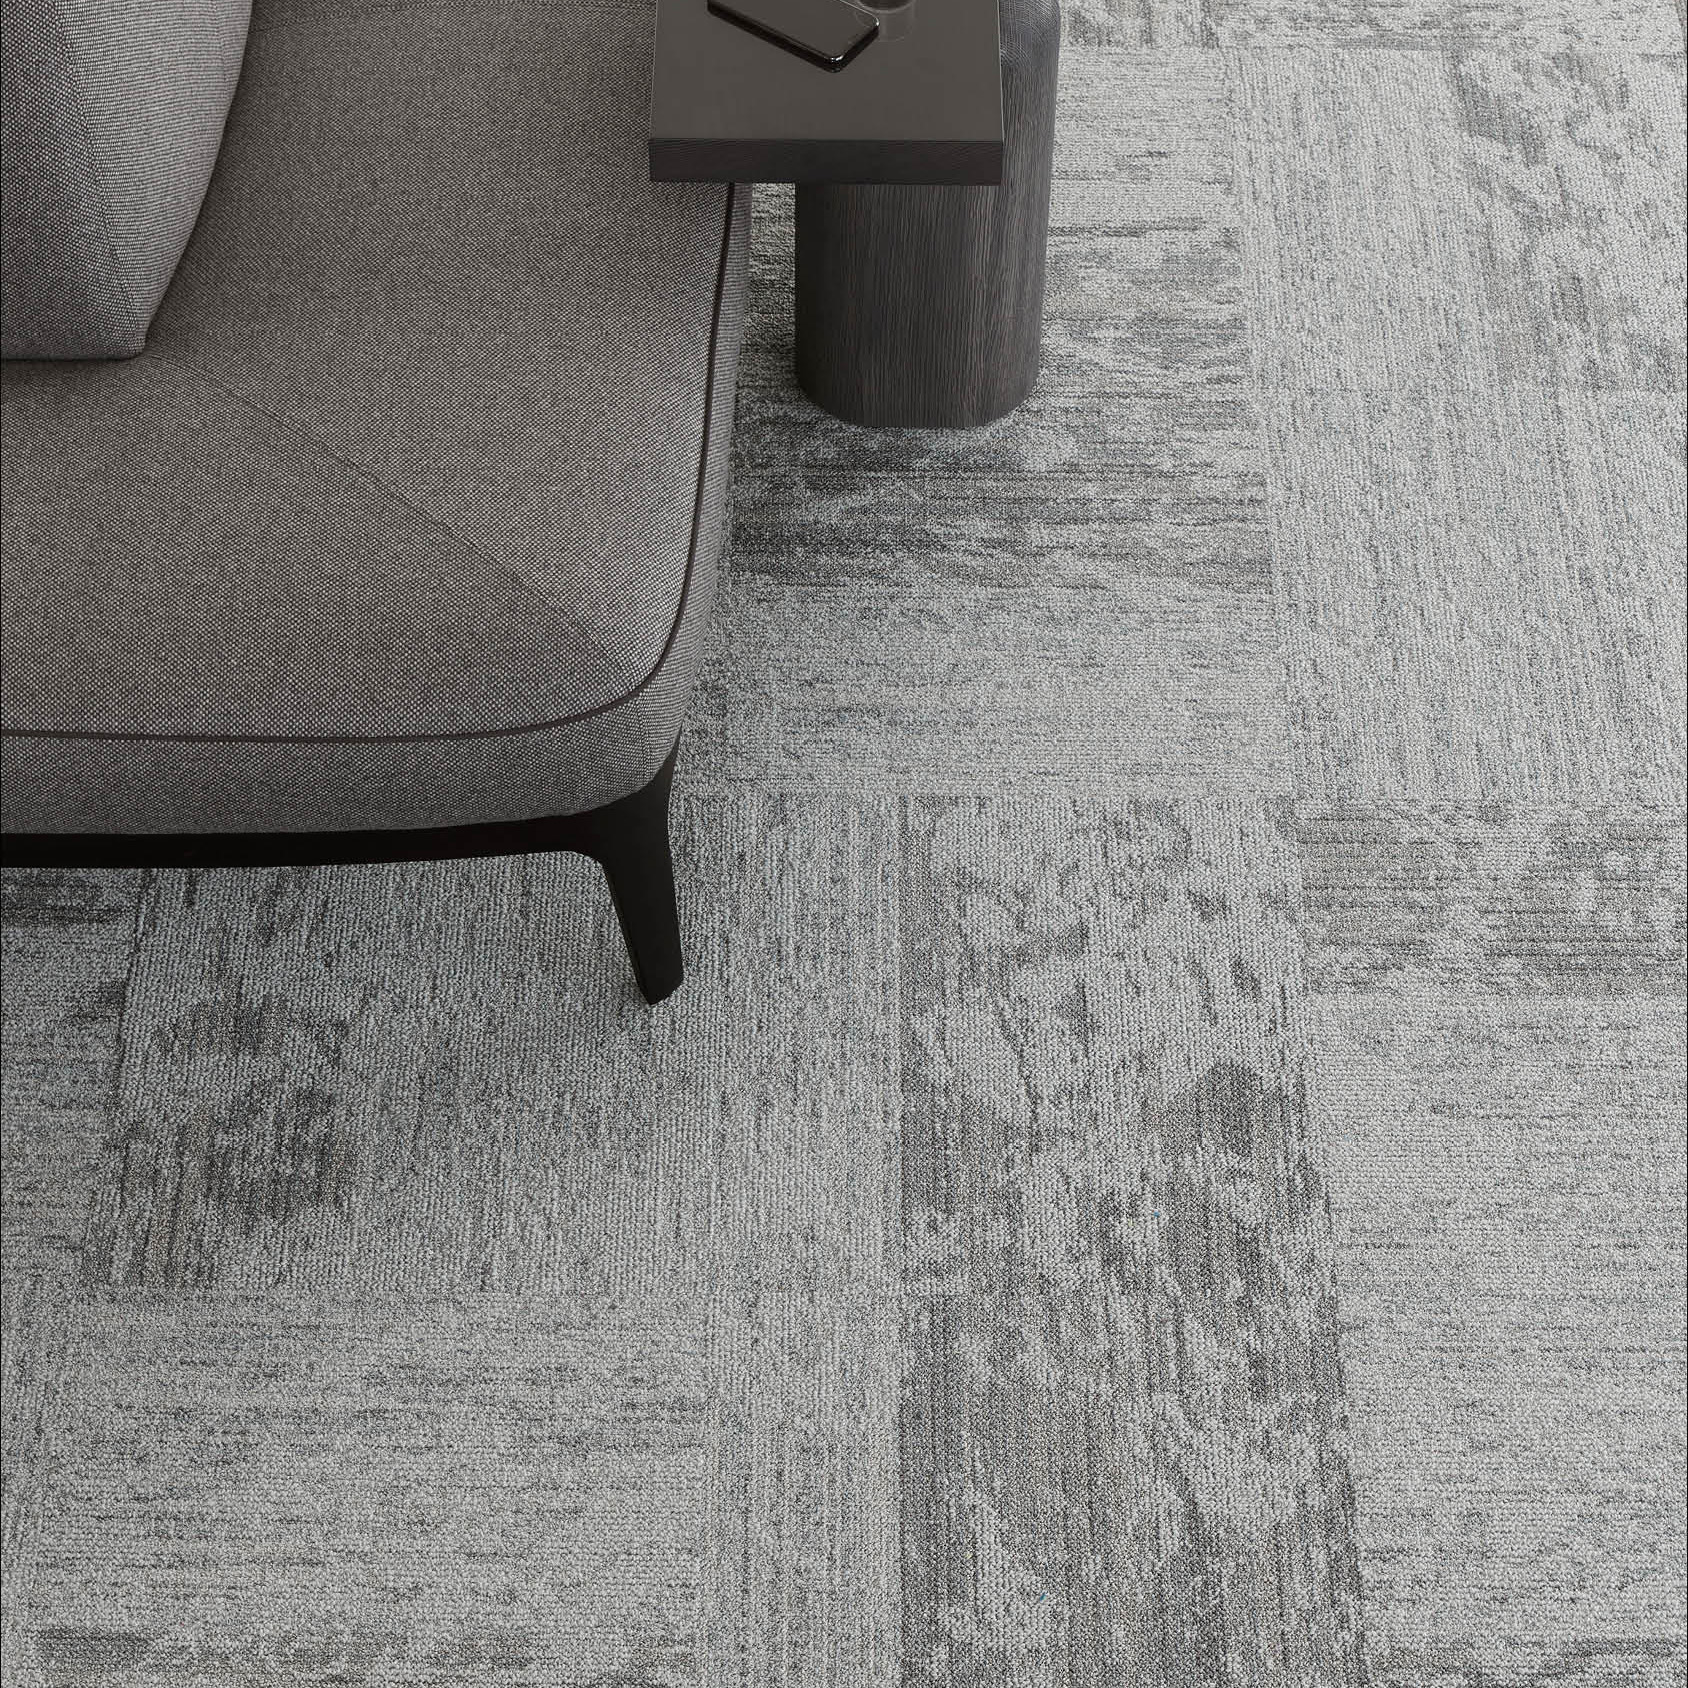 Desso Breccia Carpet Tile in a commercial office space in dark grey